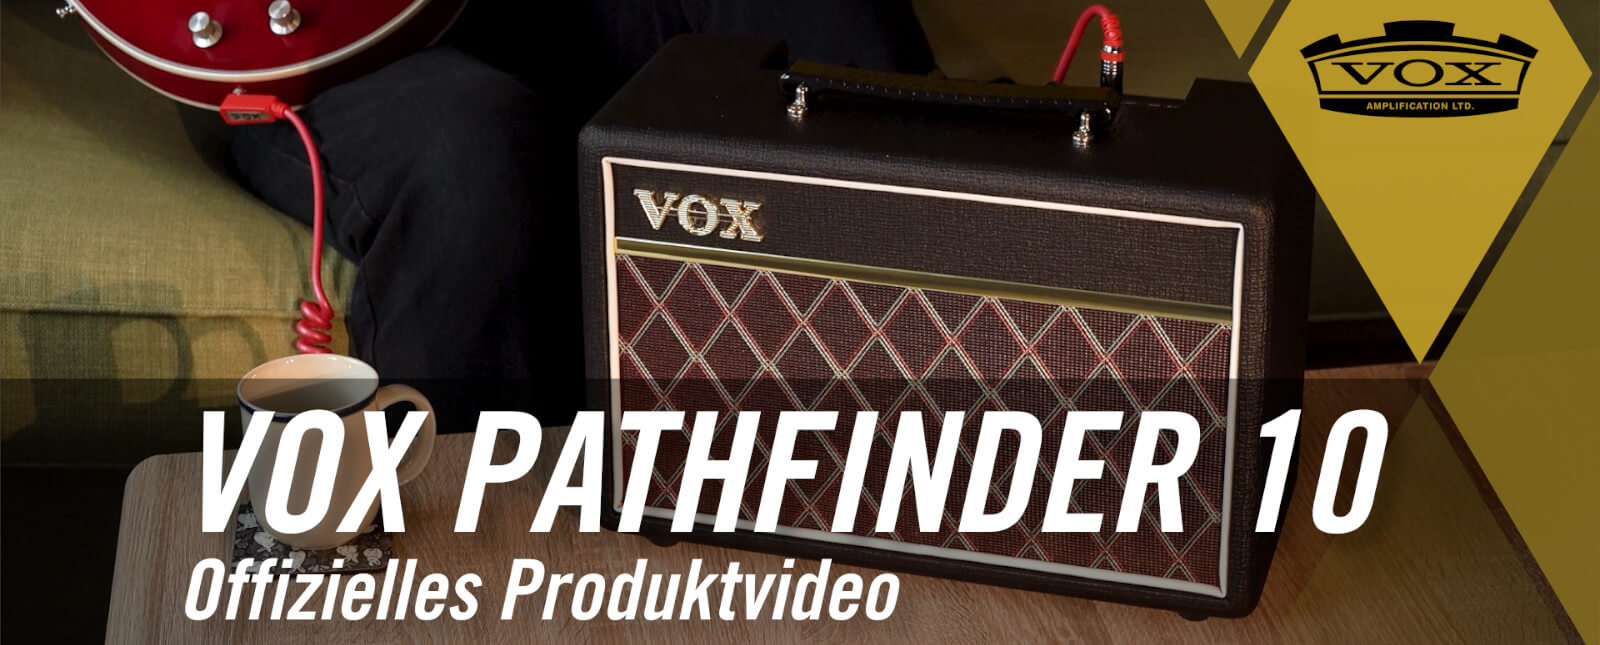 VOX Pathfinder 10 - Offizielles Produktvideo thumbnail